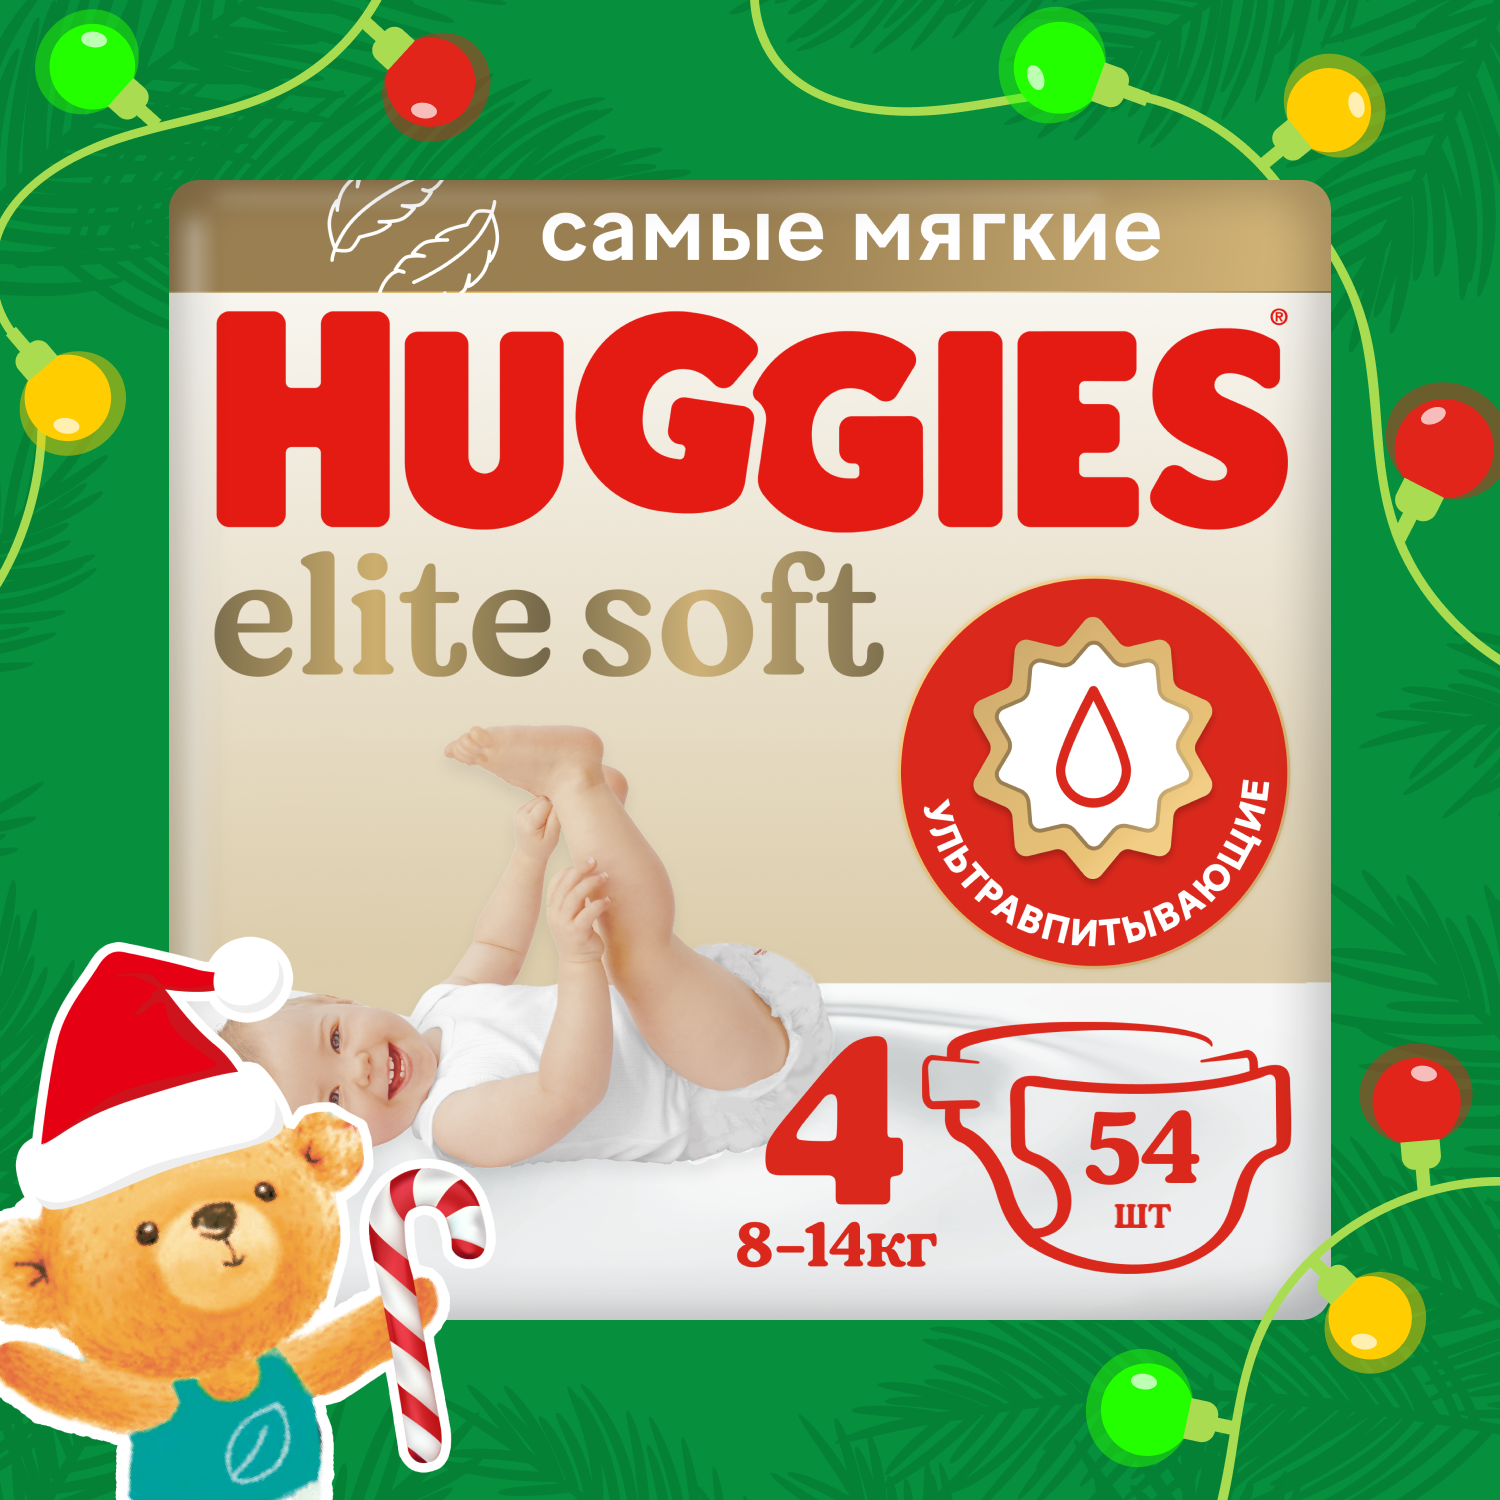  Huggies Elite Soft 8-14, 4 , 54